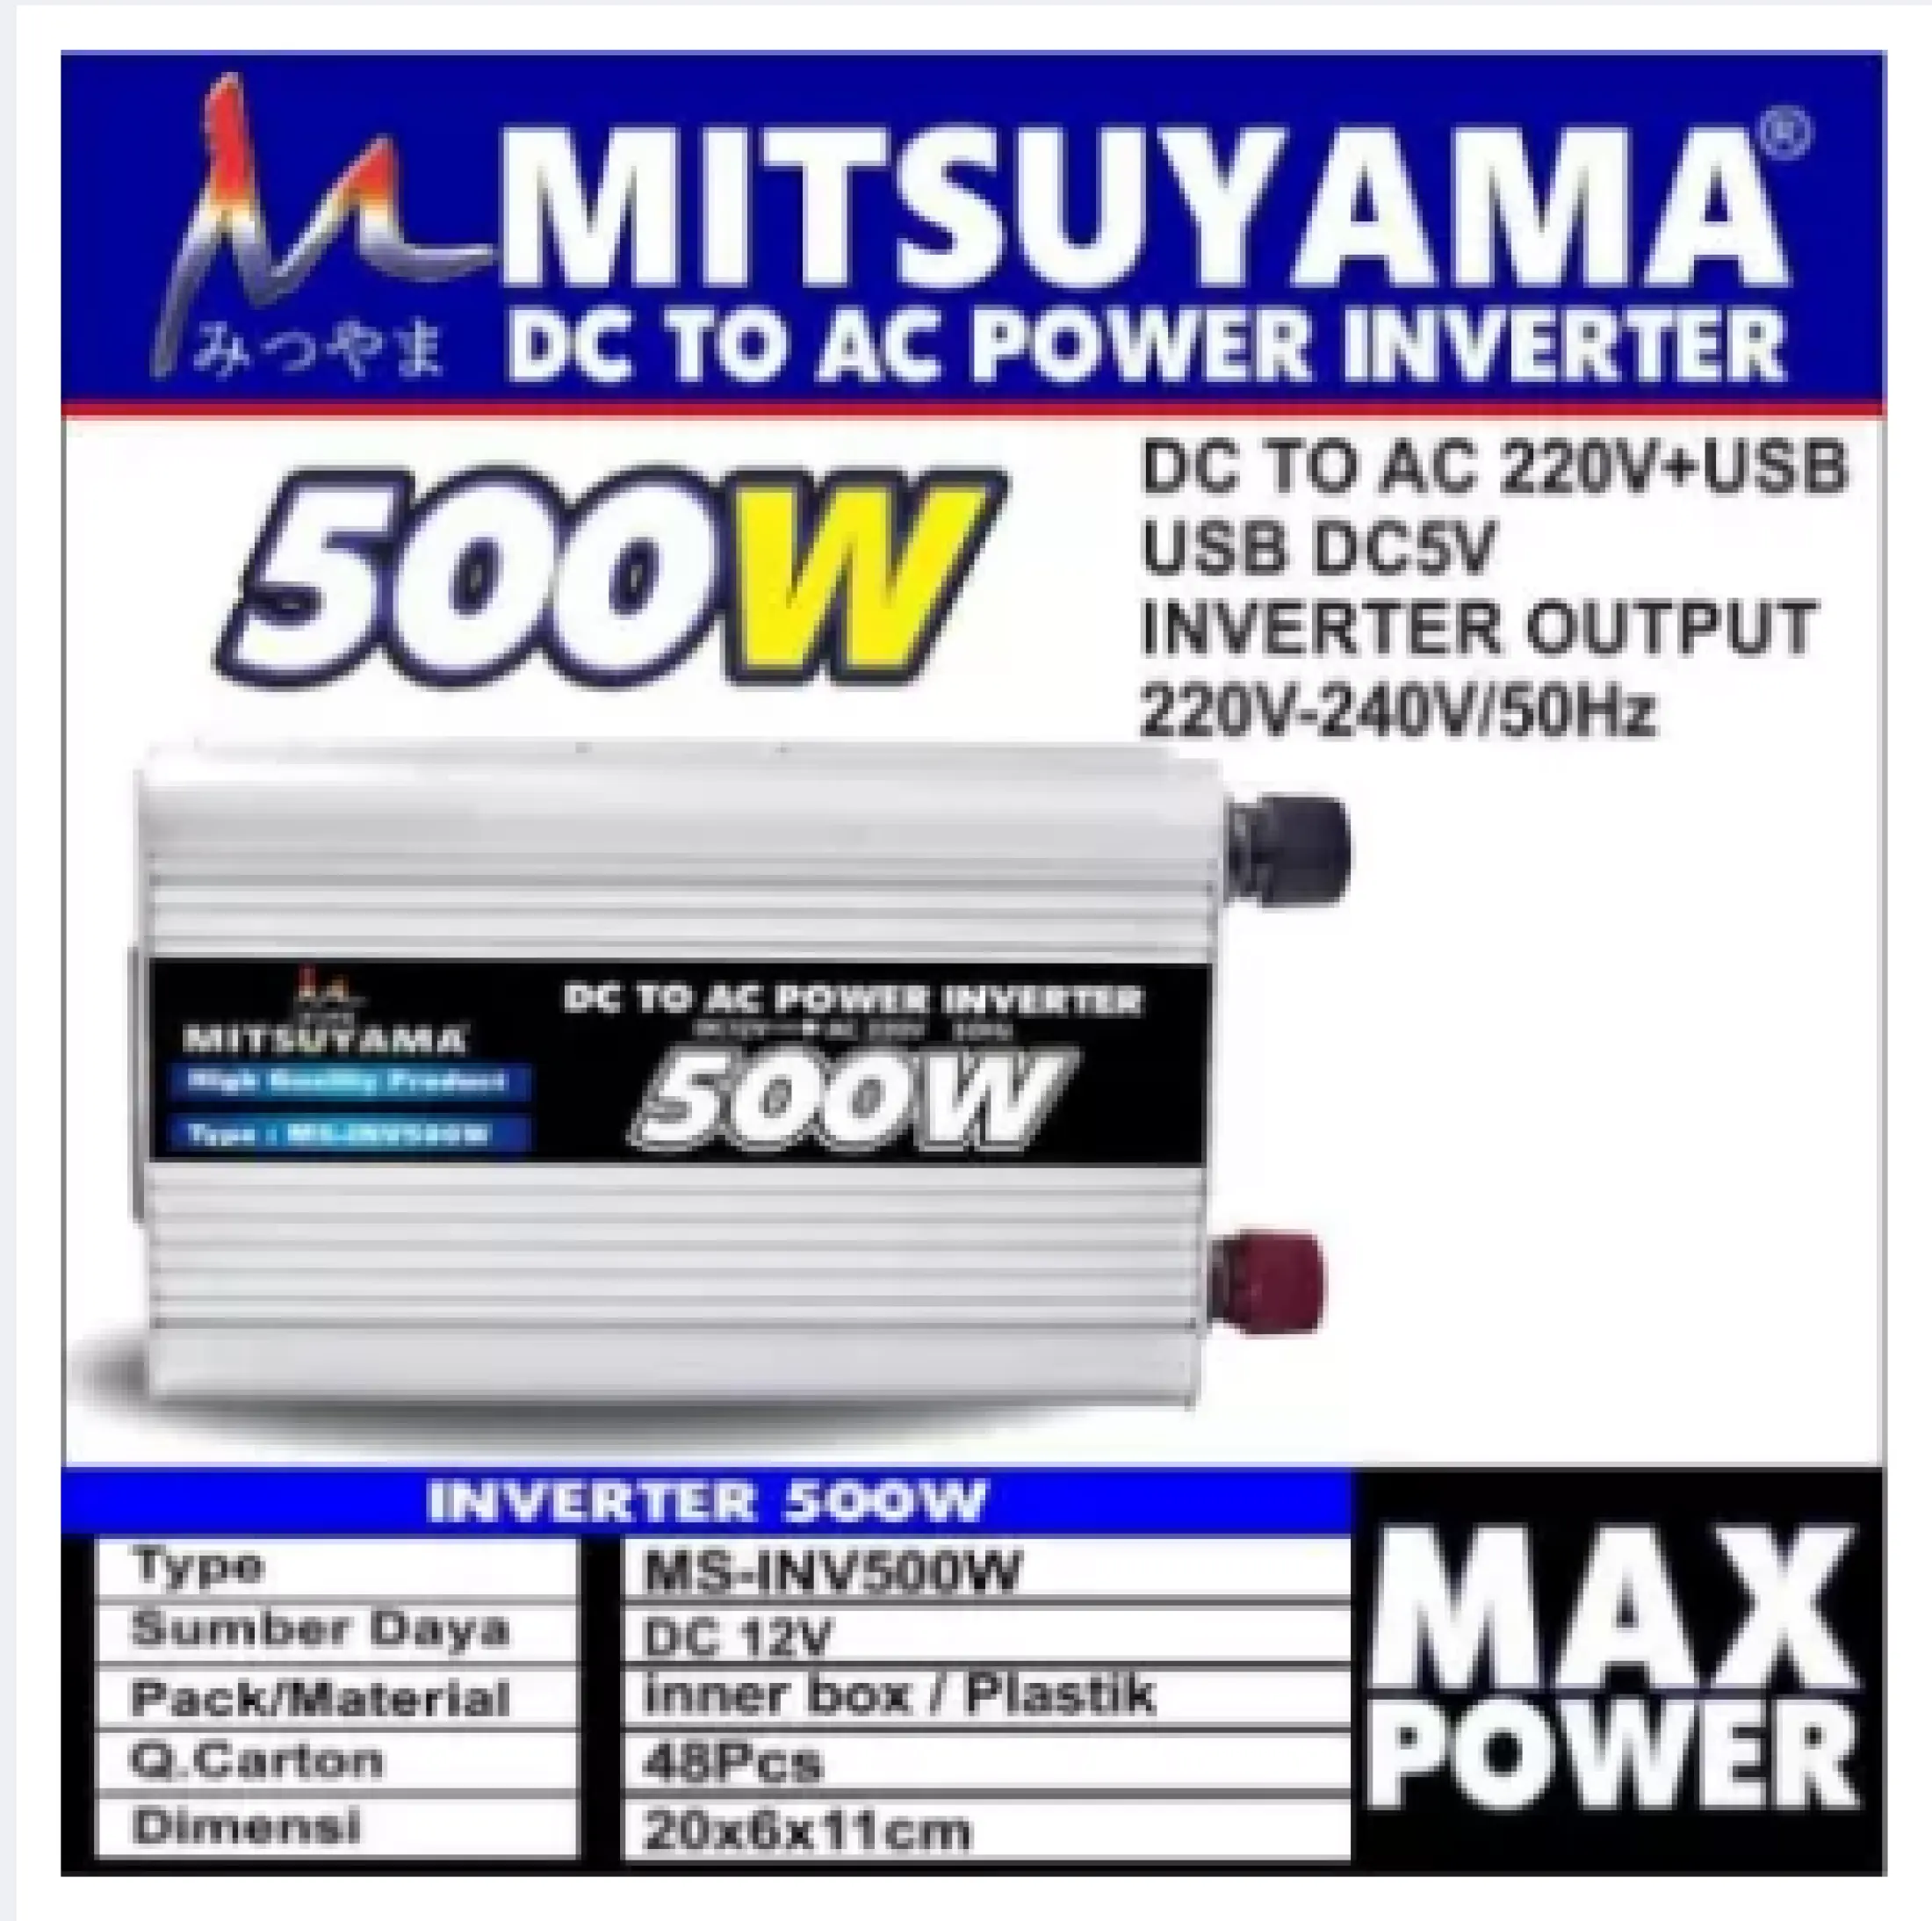 POWER INVERTER MITSUYAMA 500W DC TO AC